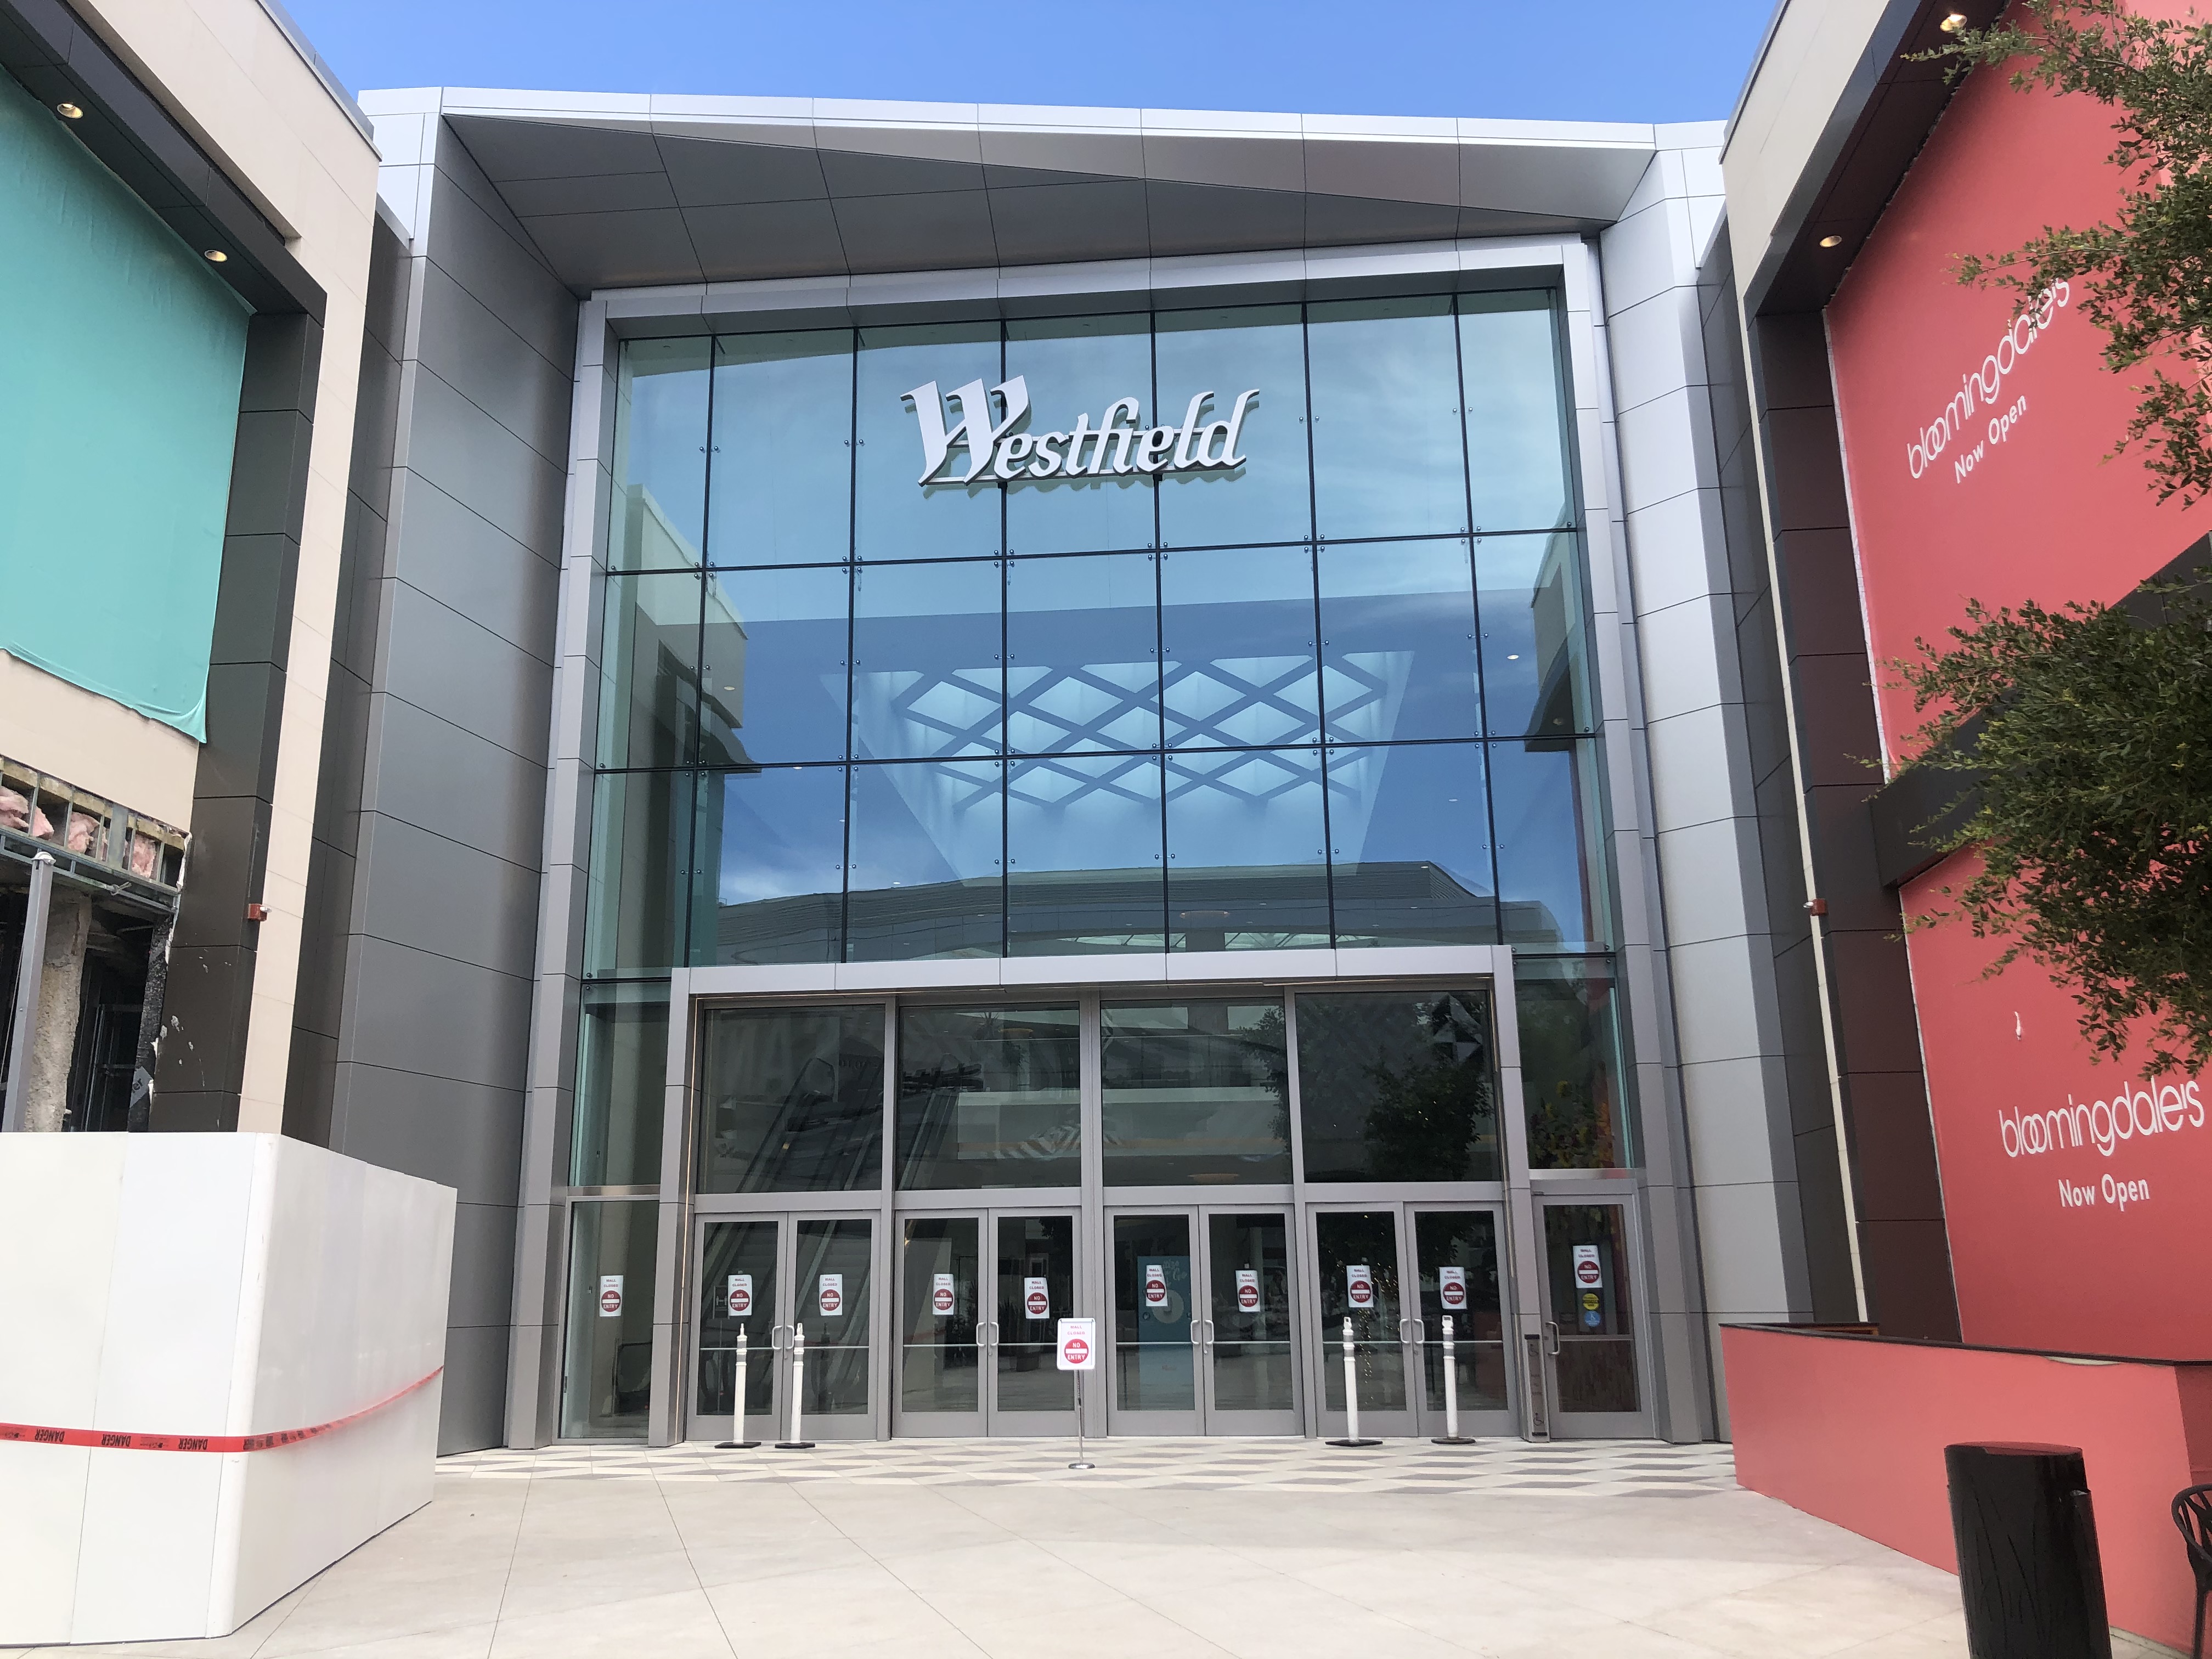 Westfield Valley Fair Mall - Entrances